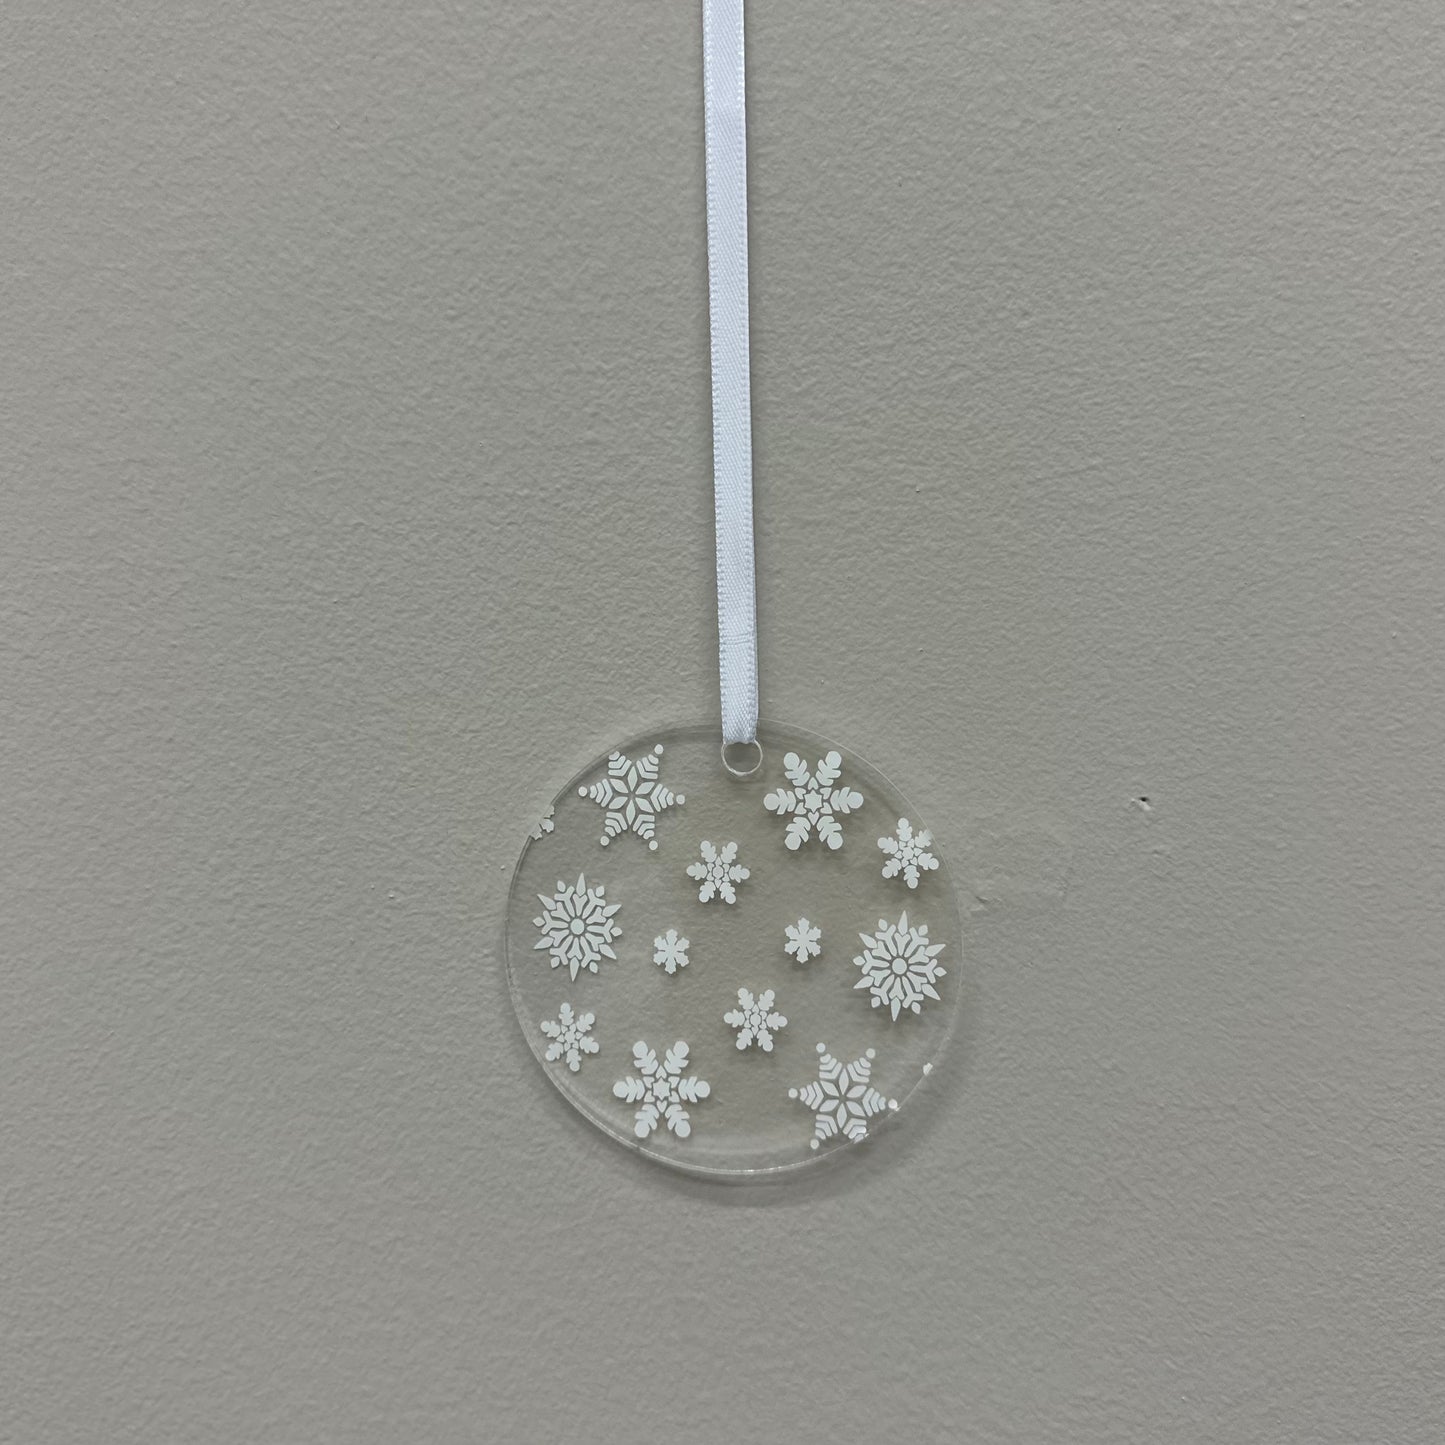 Christmas ornament - Small snowflake